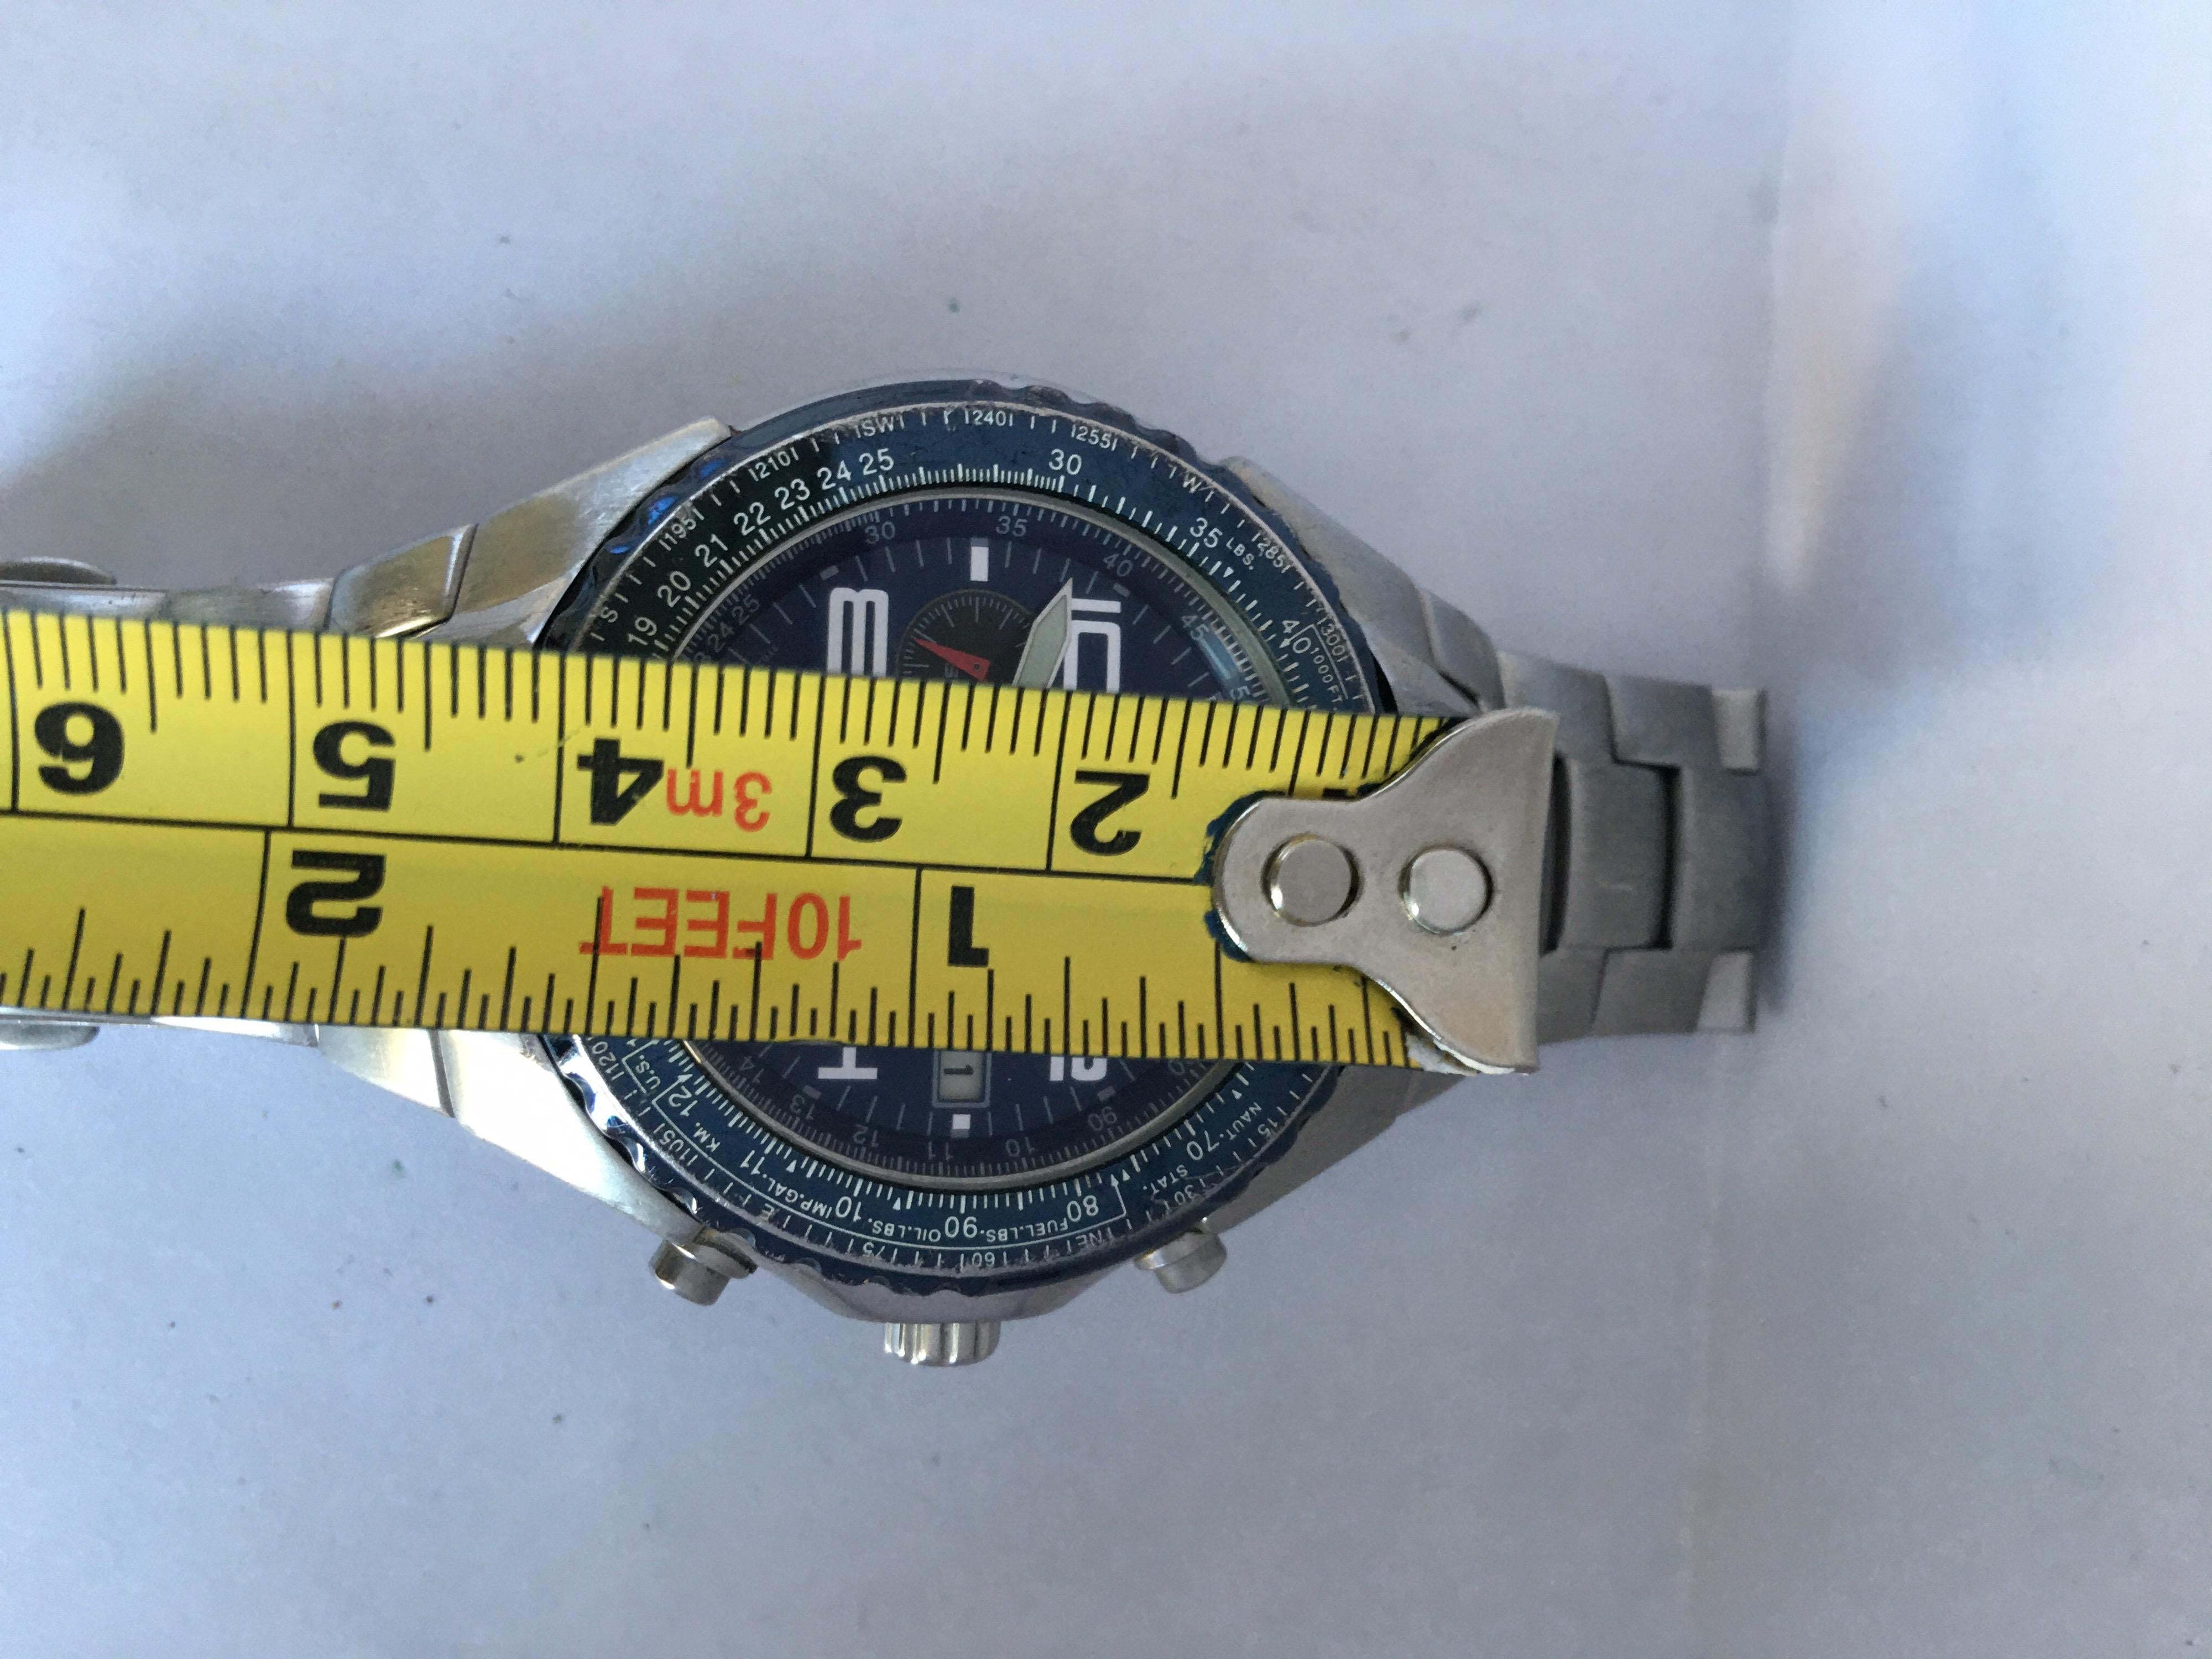 pulsar 100m watch price